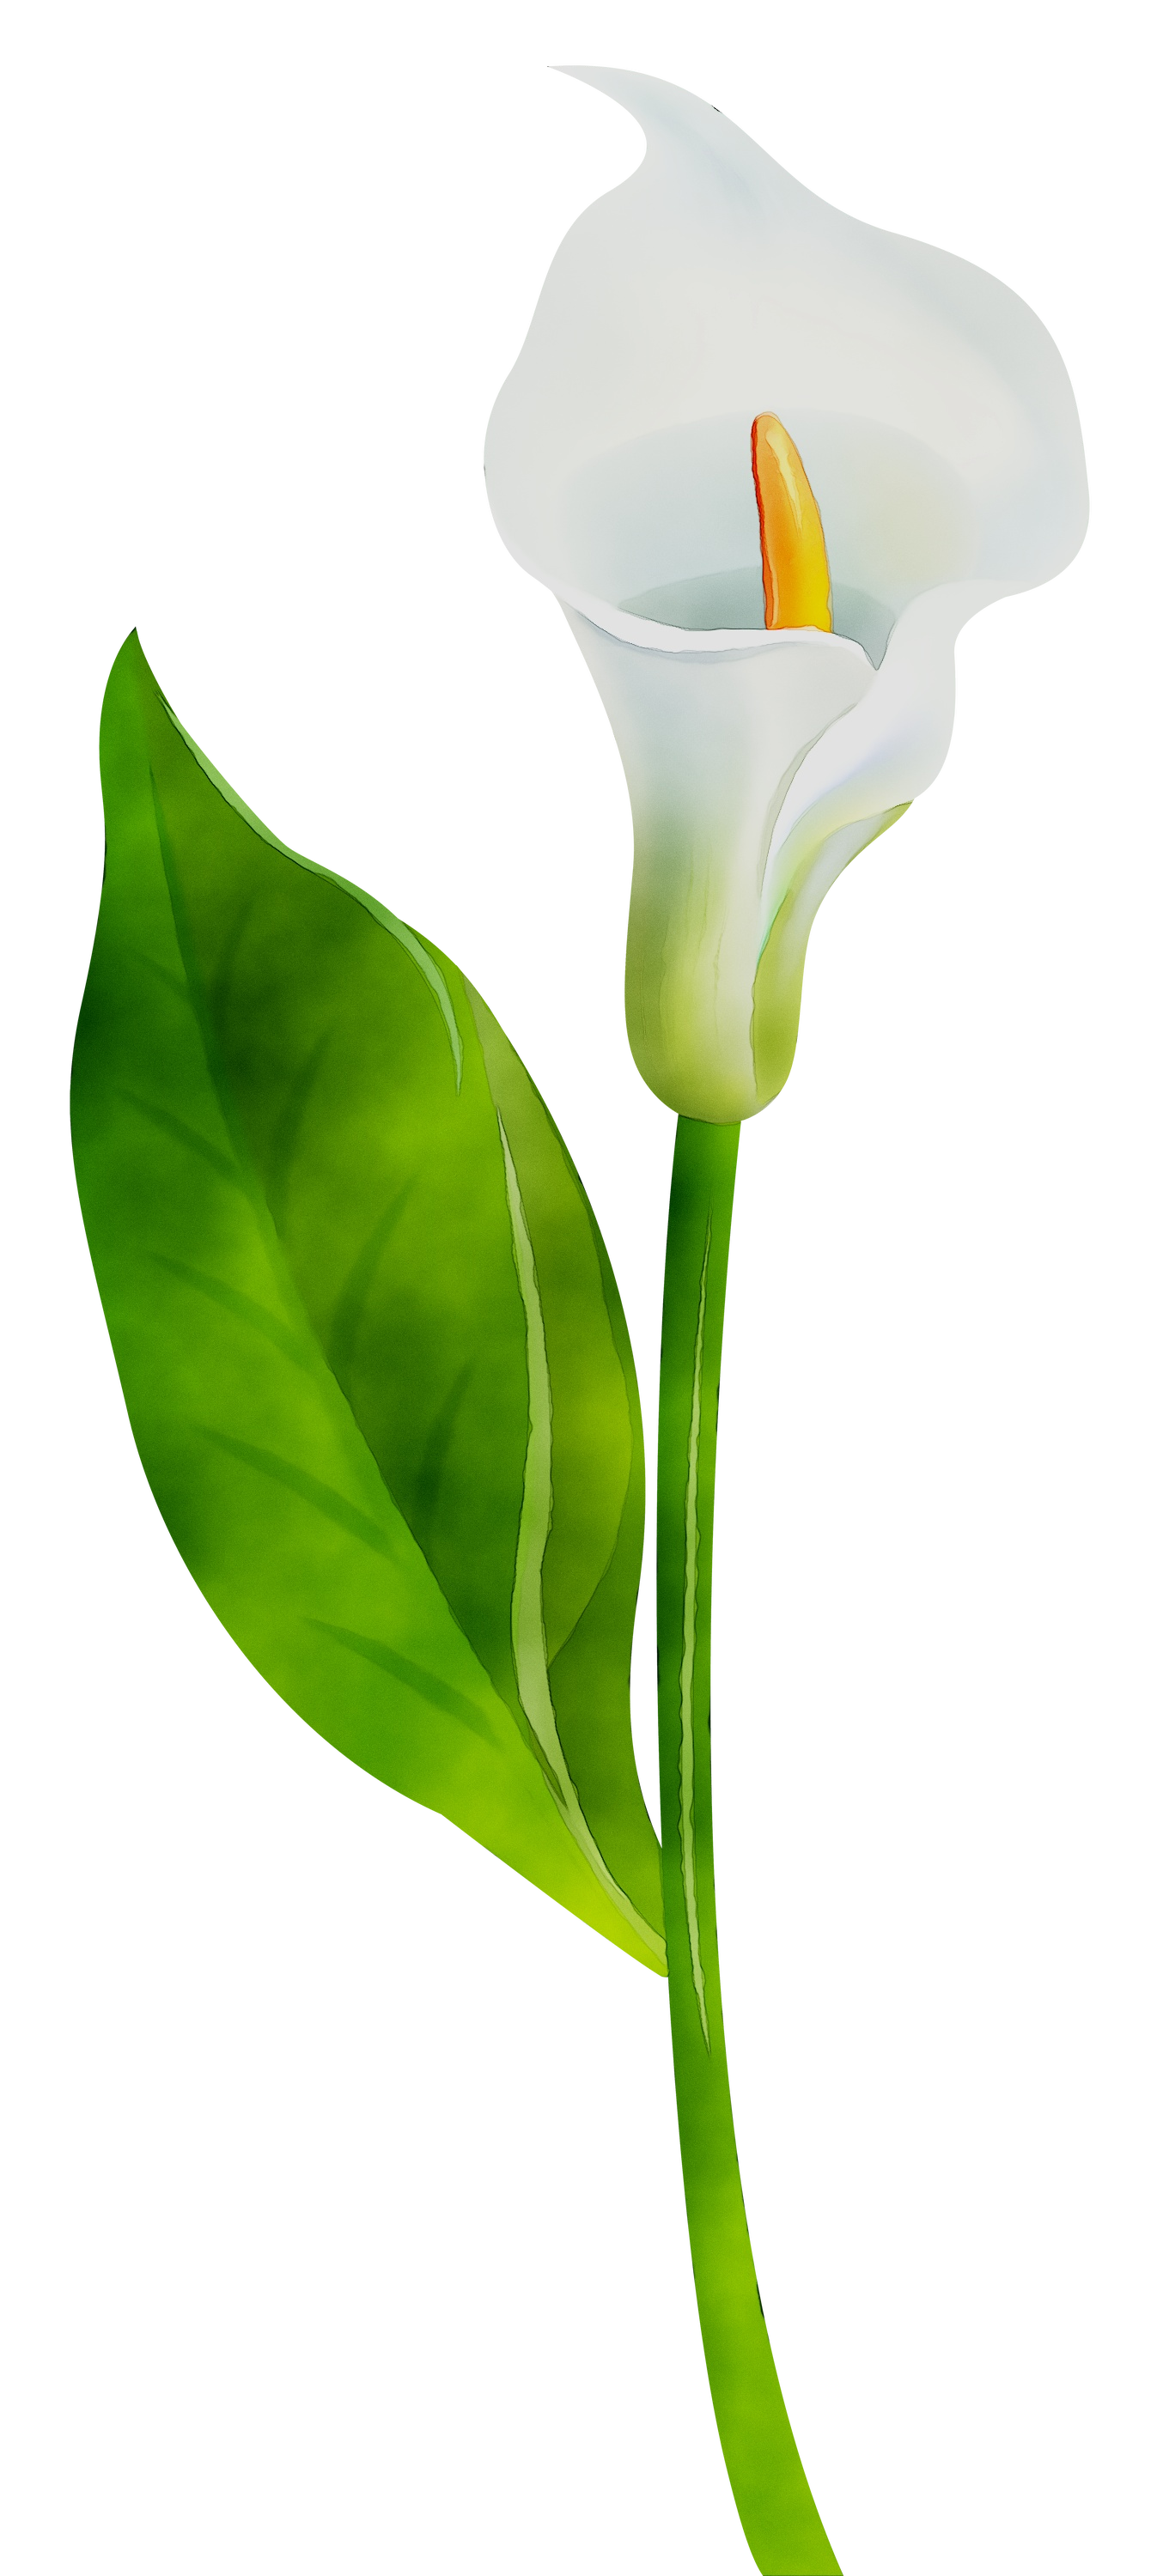 Arum Lilies Plant stem Cut flowers Leaf Product design - png download ...